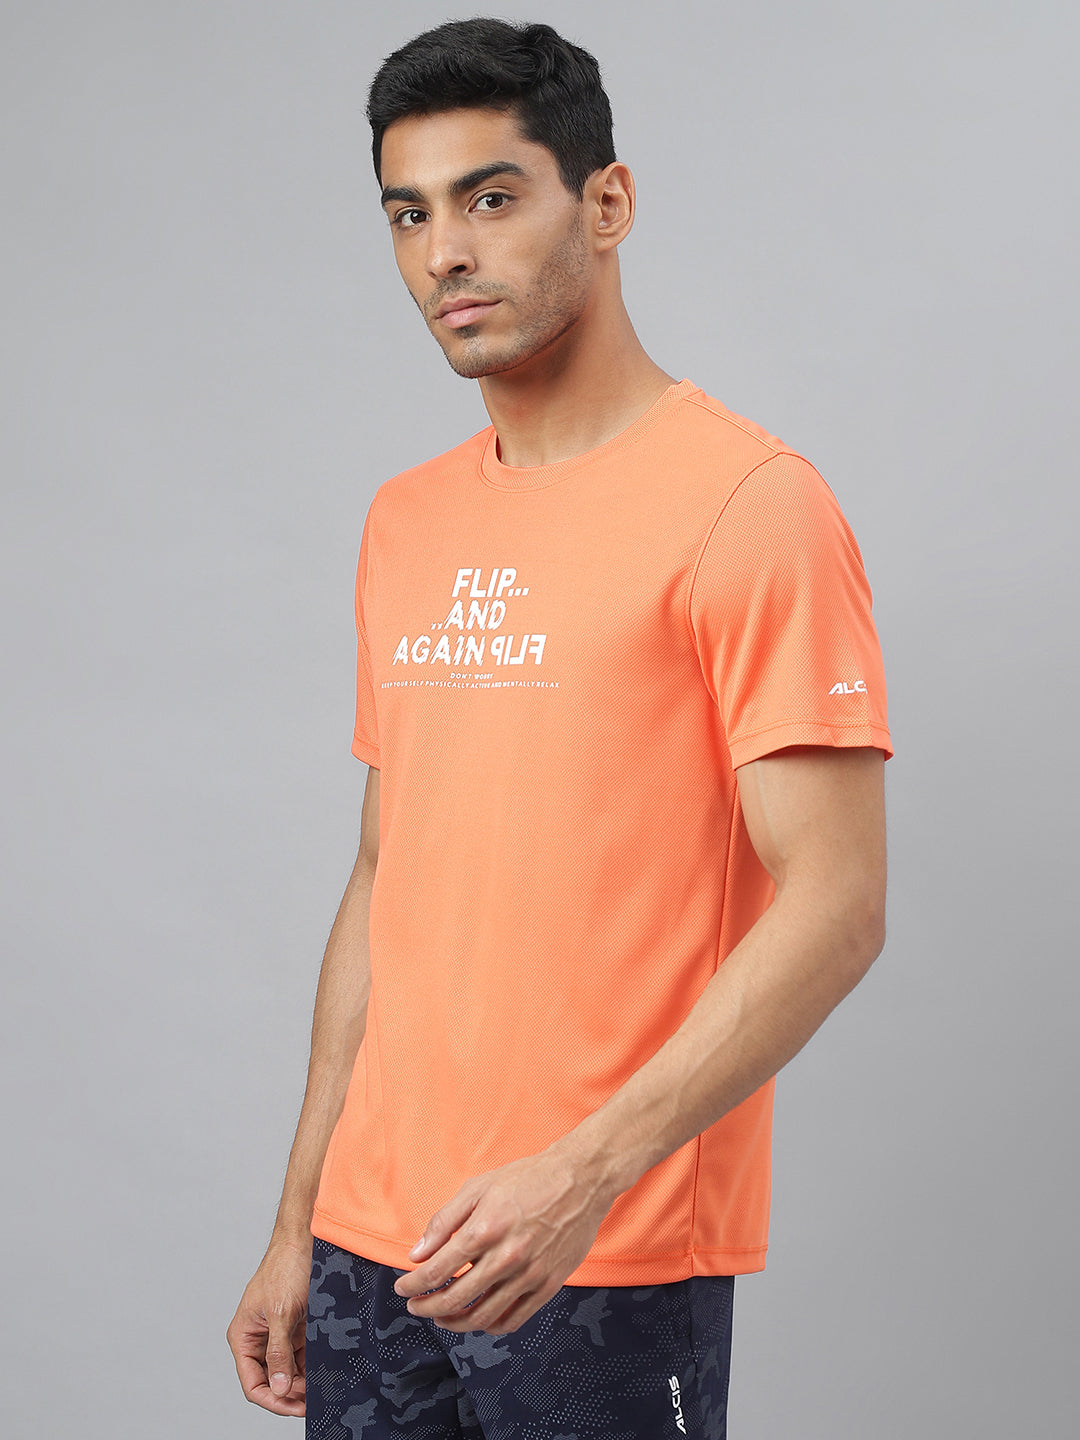 Alcis Men Printed Orange Anti-Static Slim-Fit Round Neck Training T-Shirt